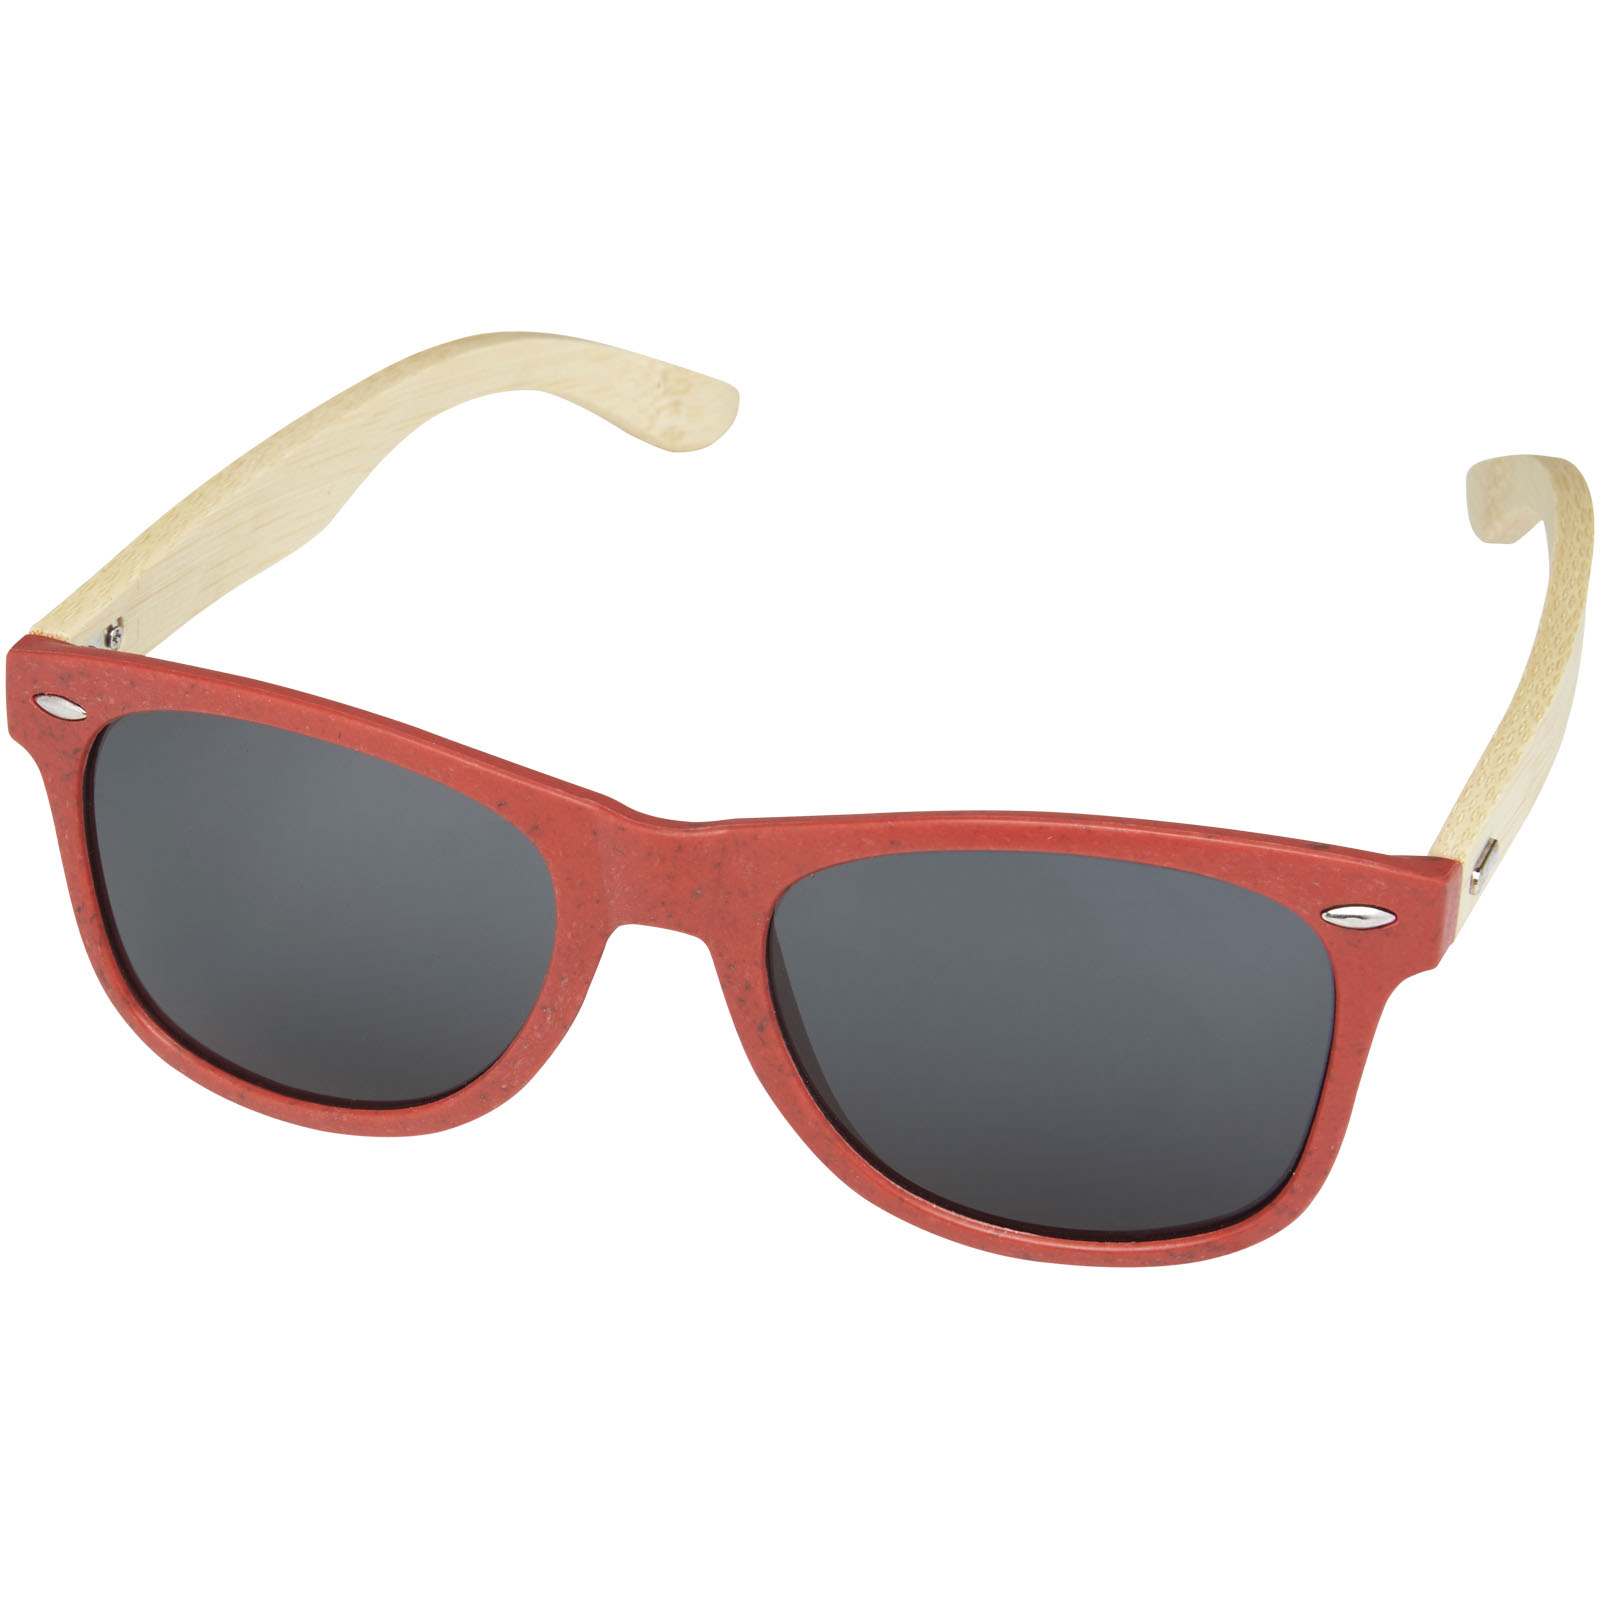 Sunglasses - Sun Ray bamboo sunglasses